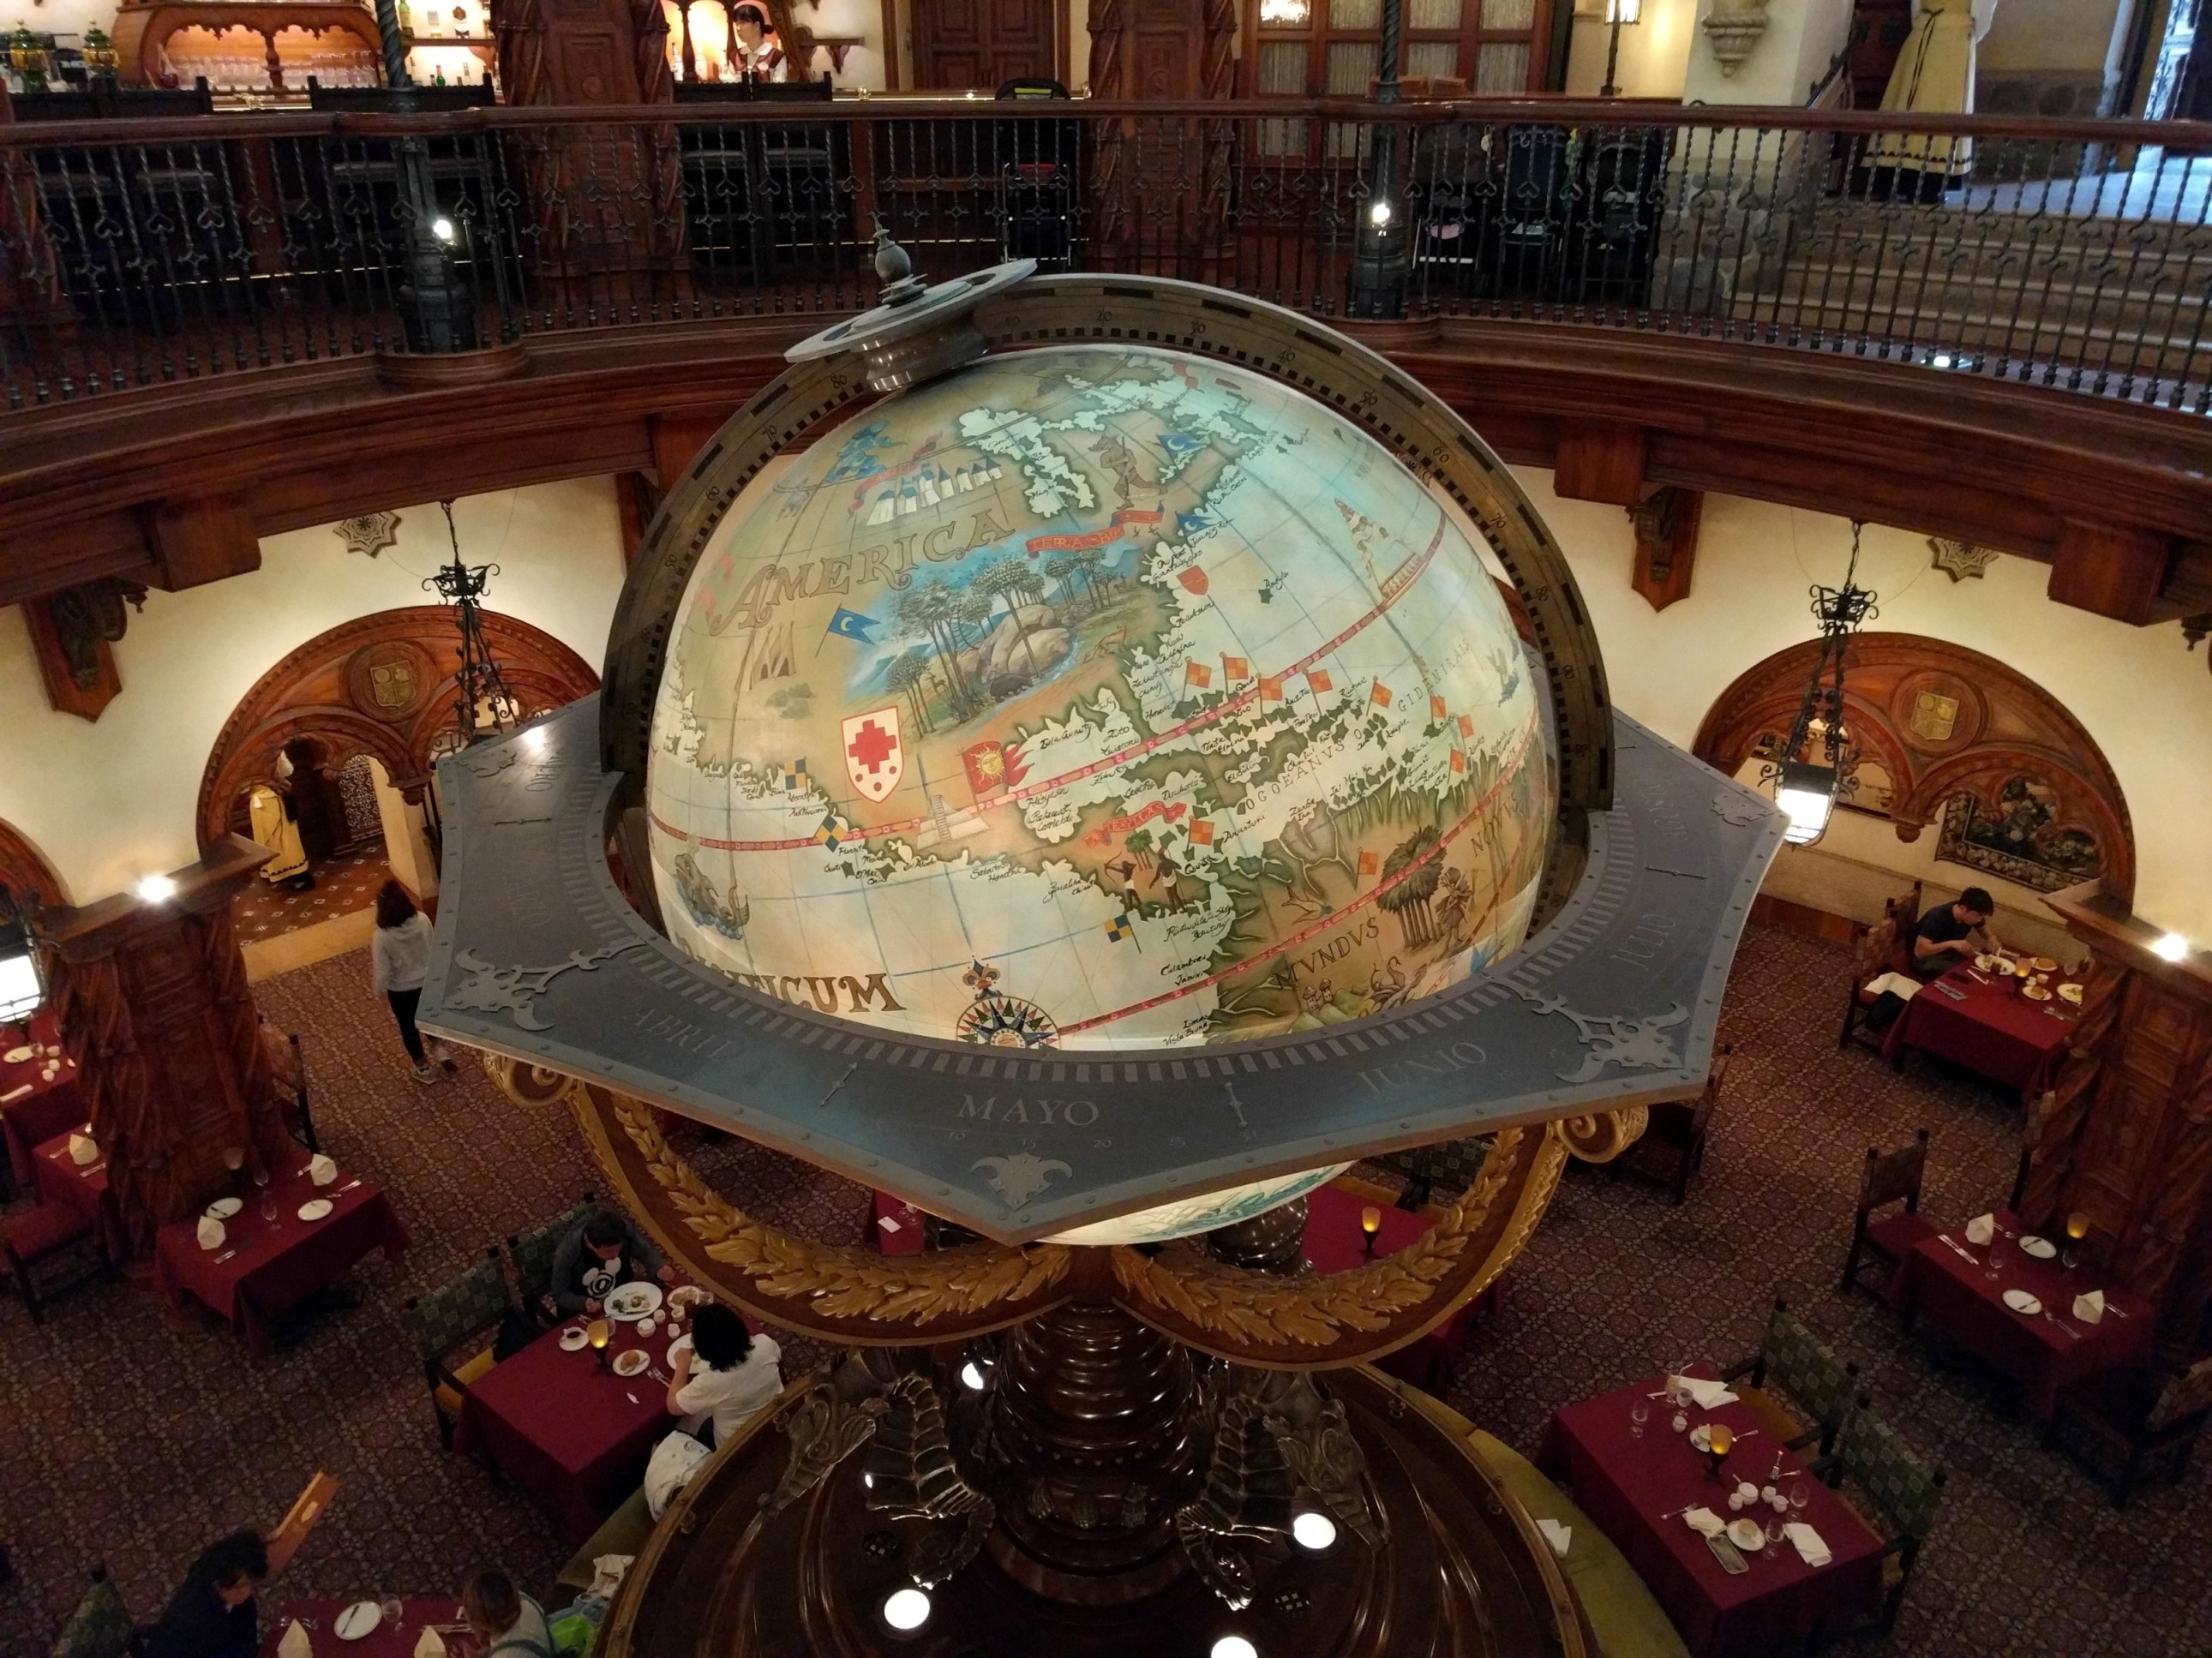 The giant globe dominates the interior of Magellan's.